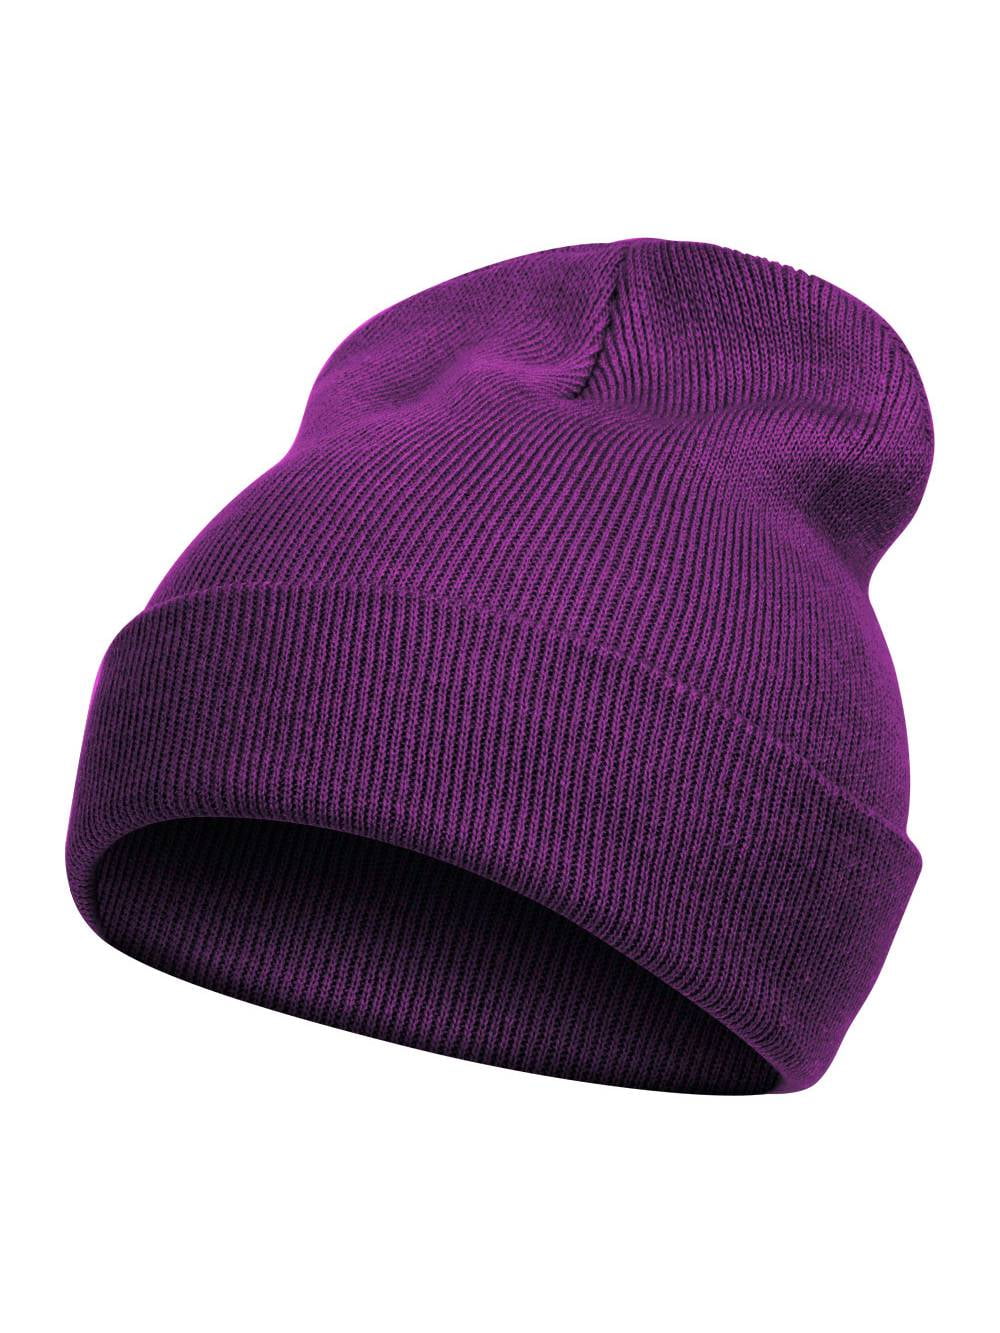 TopHeadwear Solid Color Long Beanie, Purple - Walmart.com